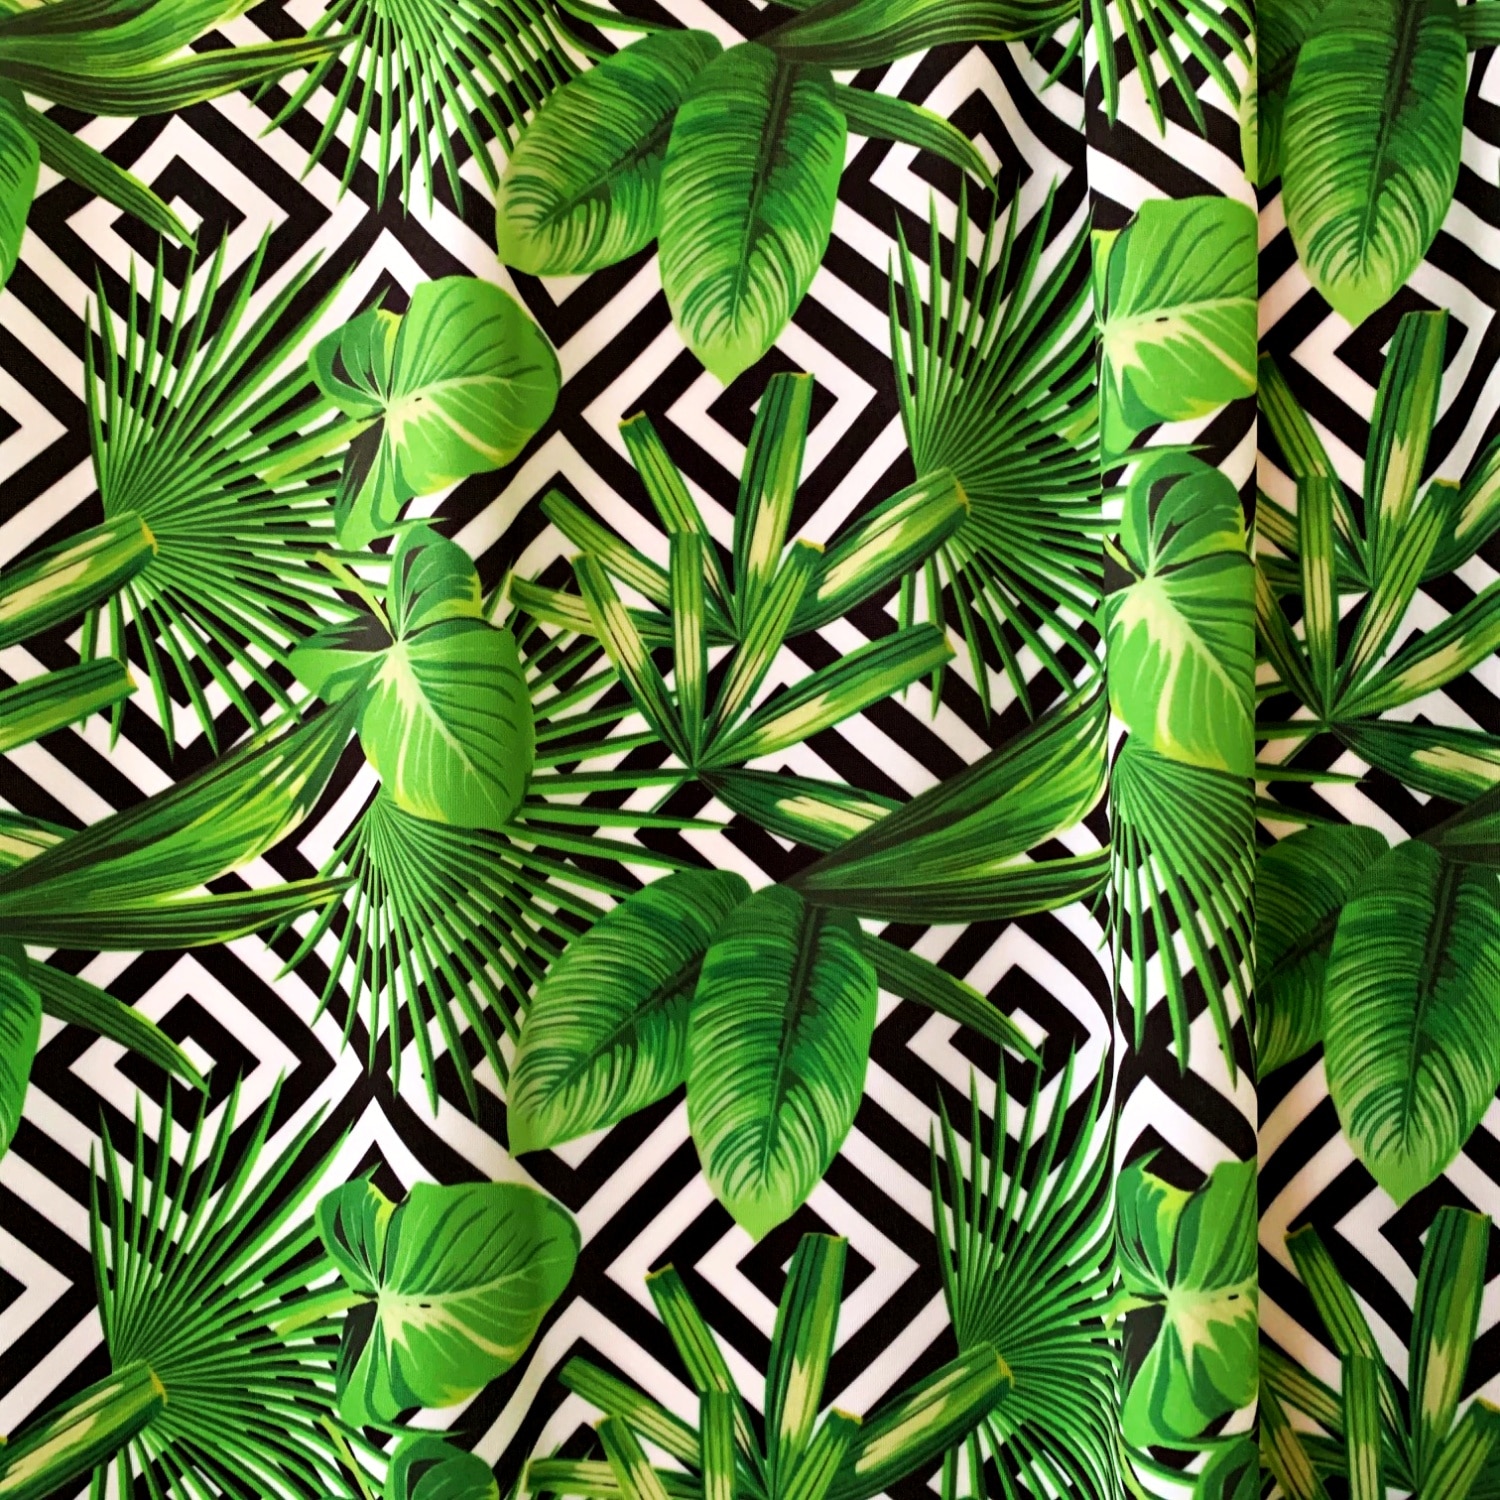 Jungle Print Swimwear Fabric - Black, white and green print